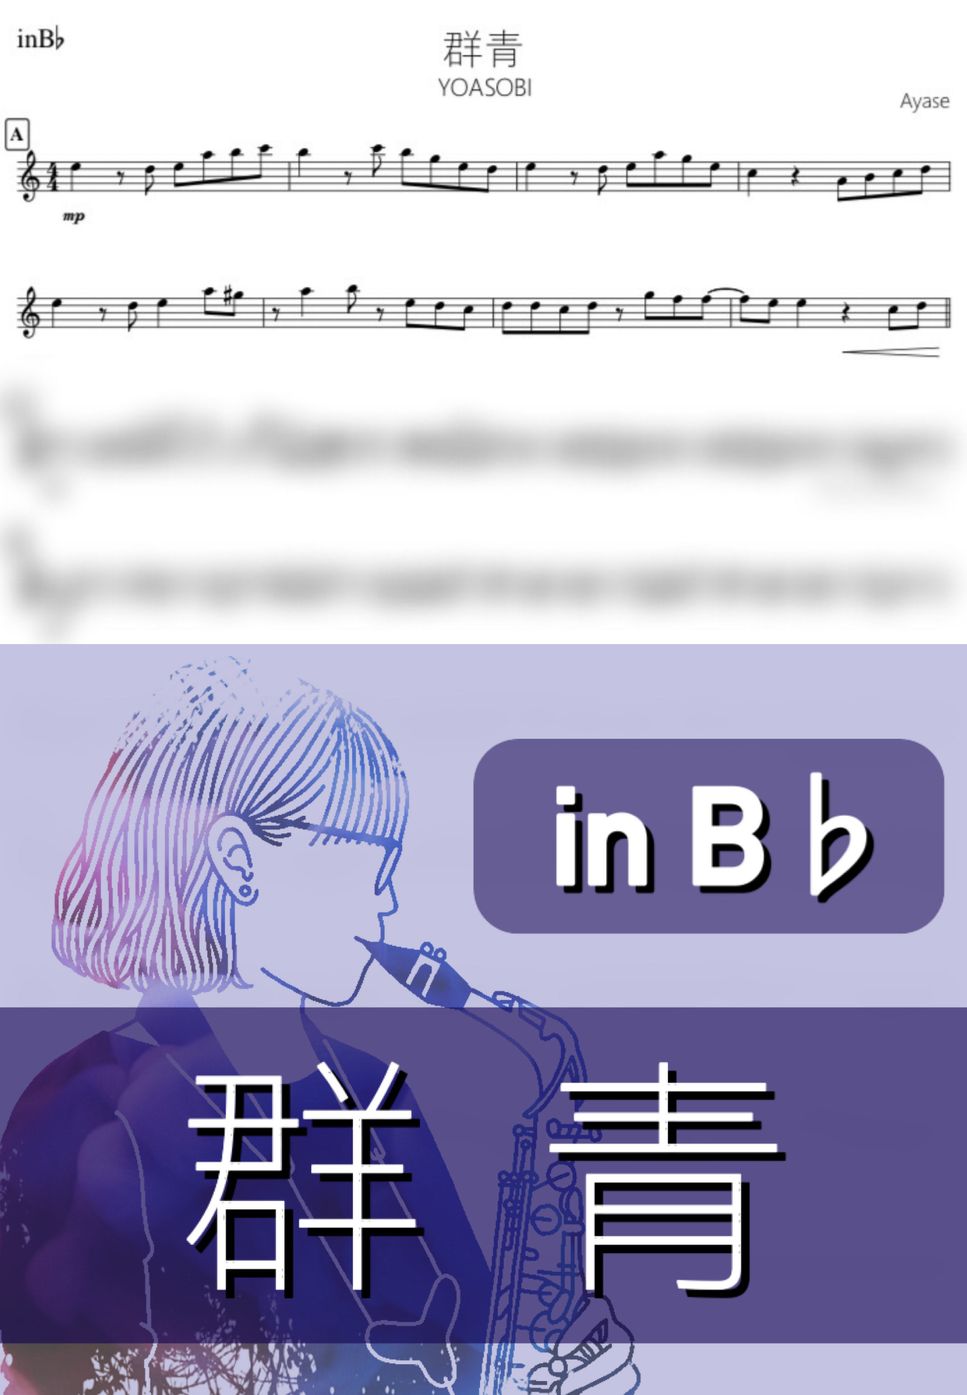 YOASOBI - 群青 (B♭) by kanamusic